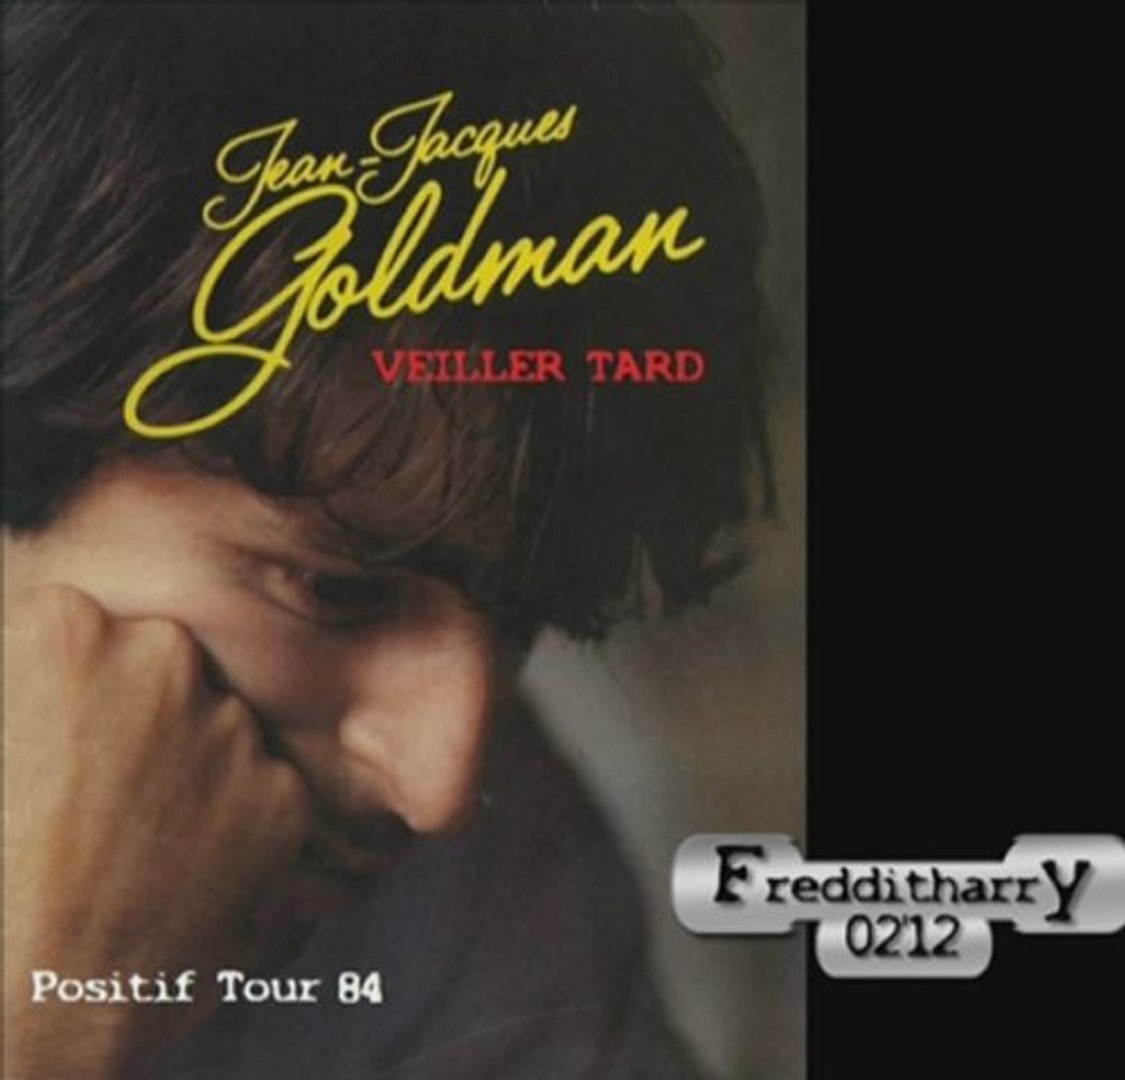 INEDIT- Veiller tard- JJ Goldman positif tour 1984 - Vidéo Dailymotion